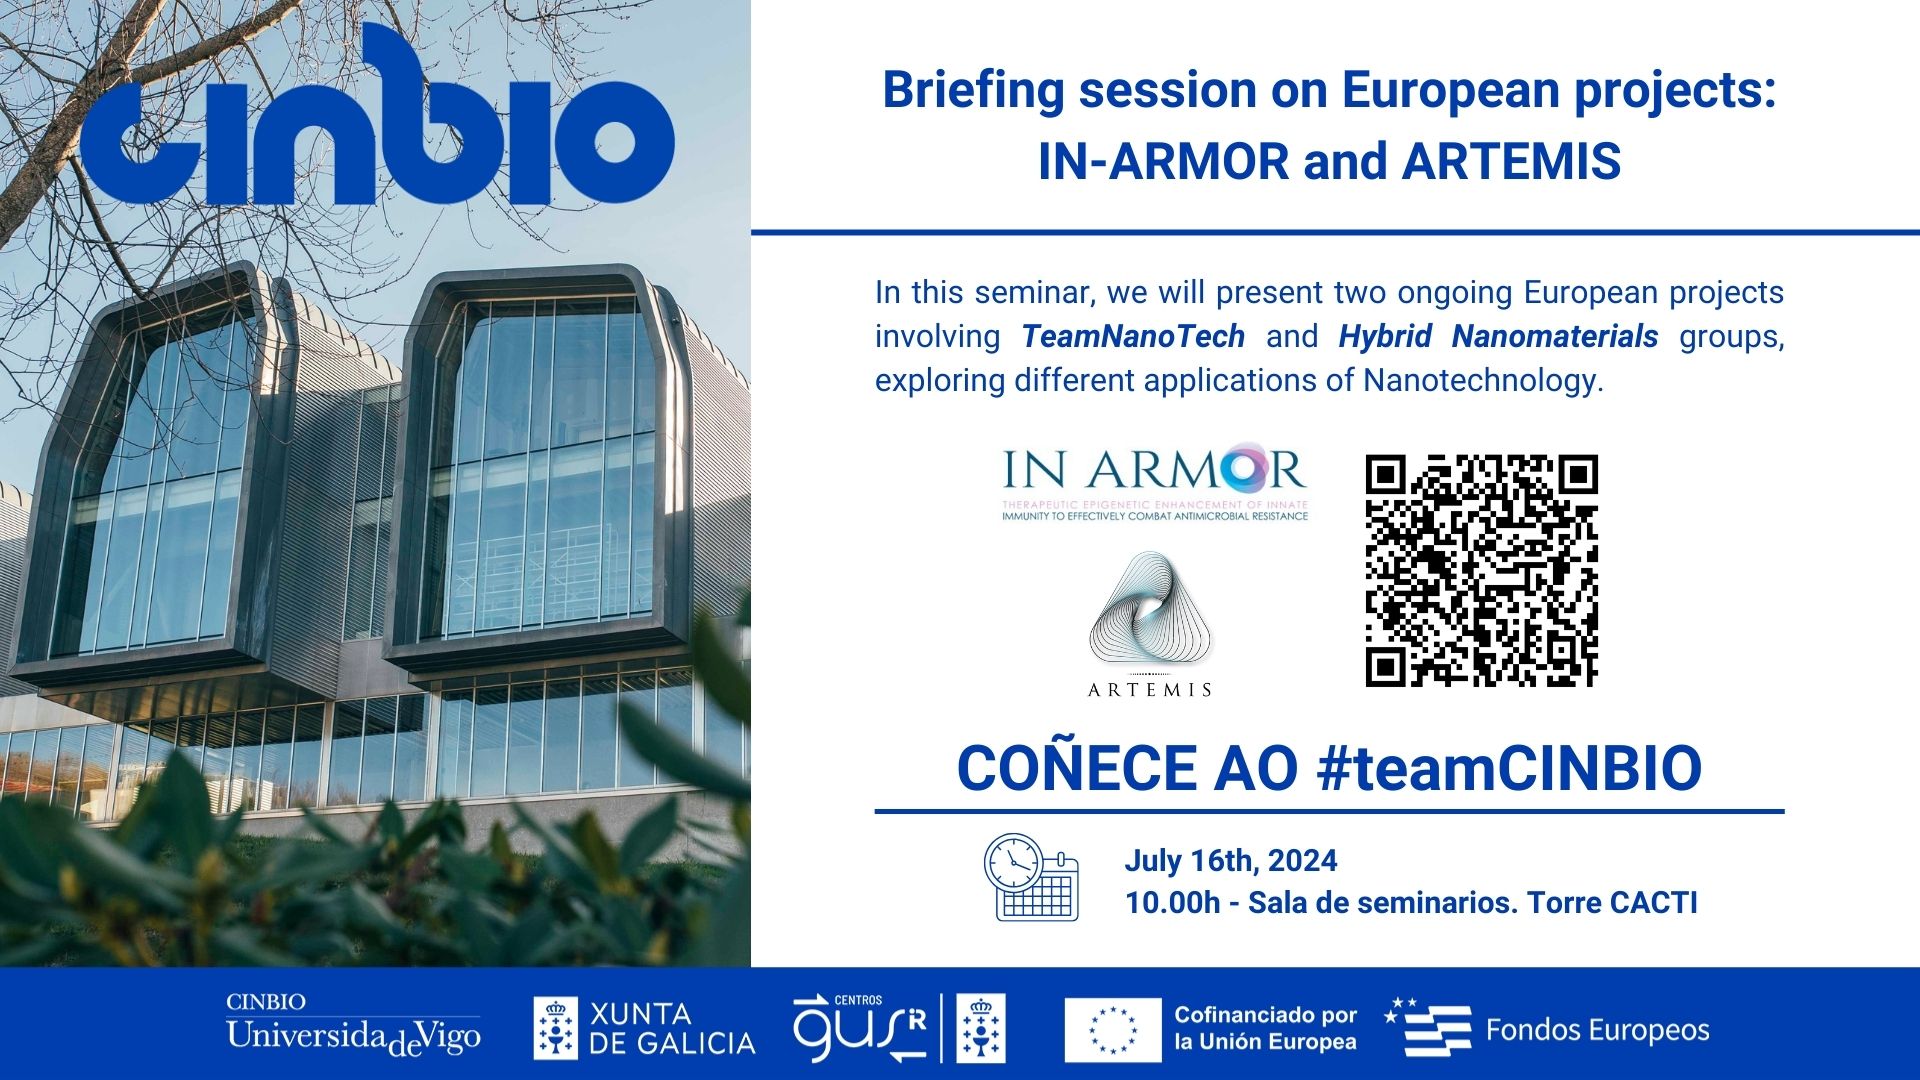 Coñece ao #teamCINBIO: IN-ARMOR and ARTEMIS, two European projects